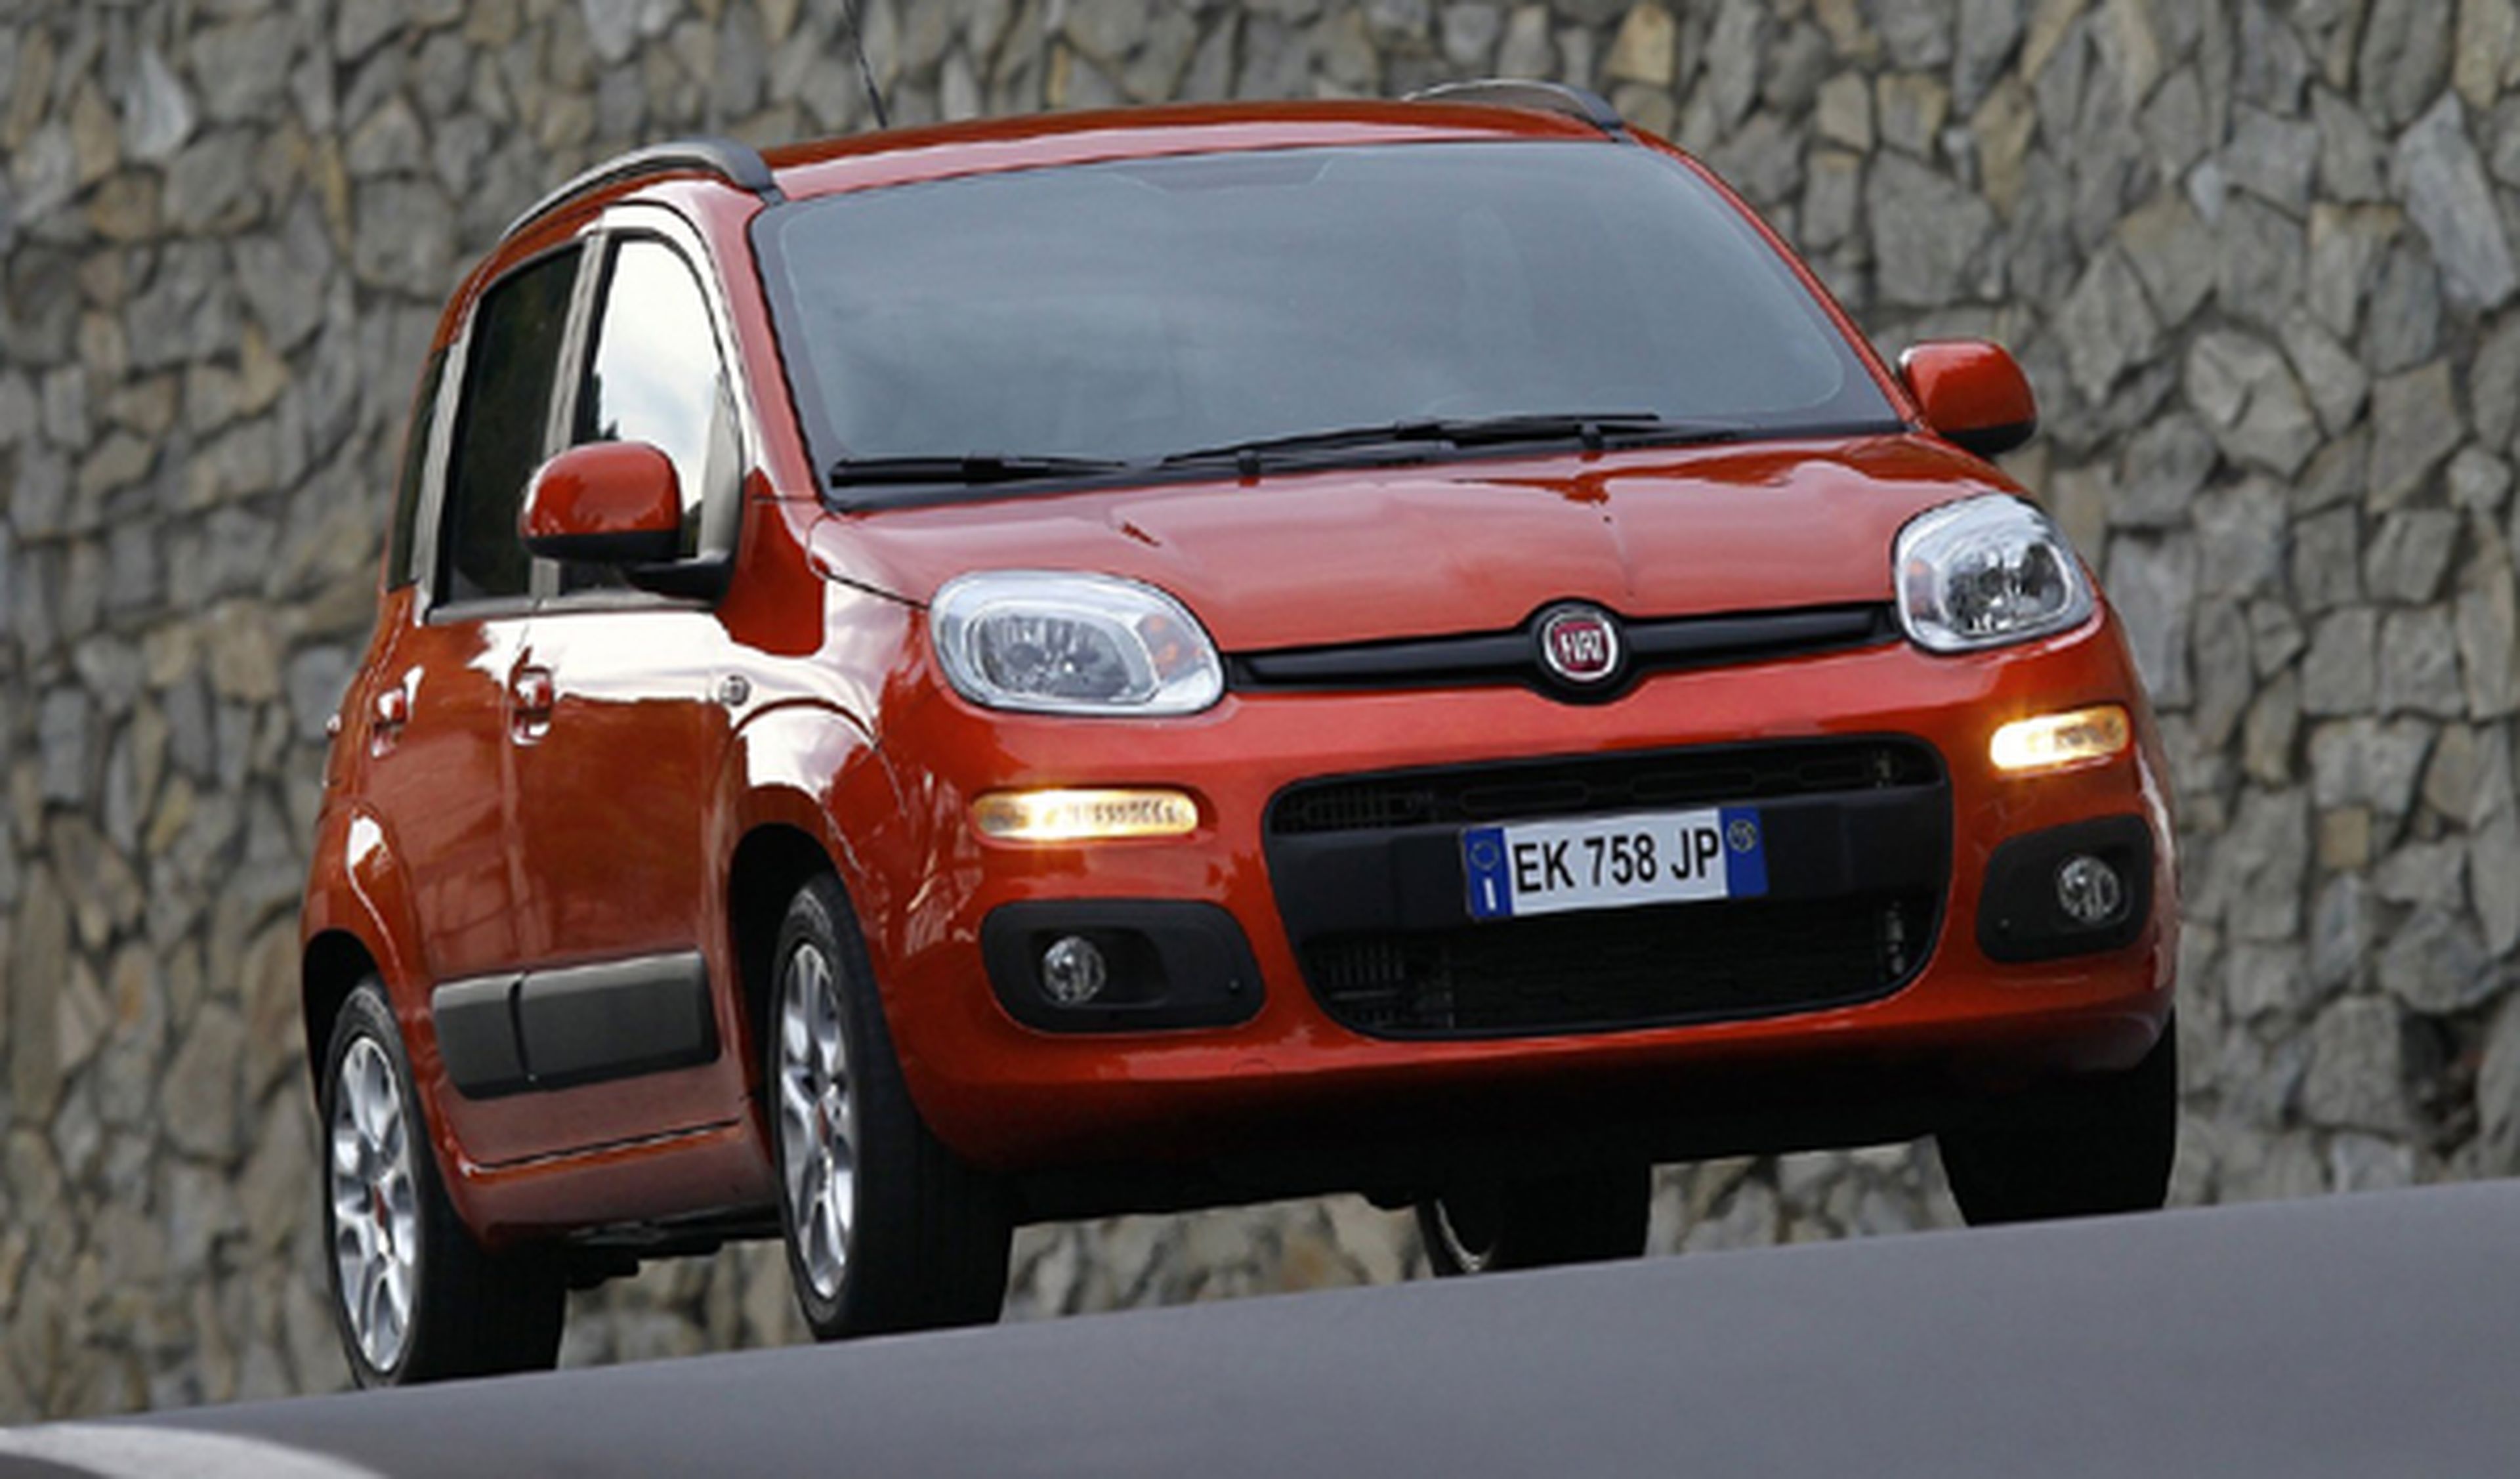 mejores coches nuevos por 7.000 euros Fiat Panda